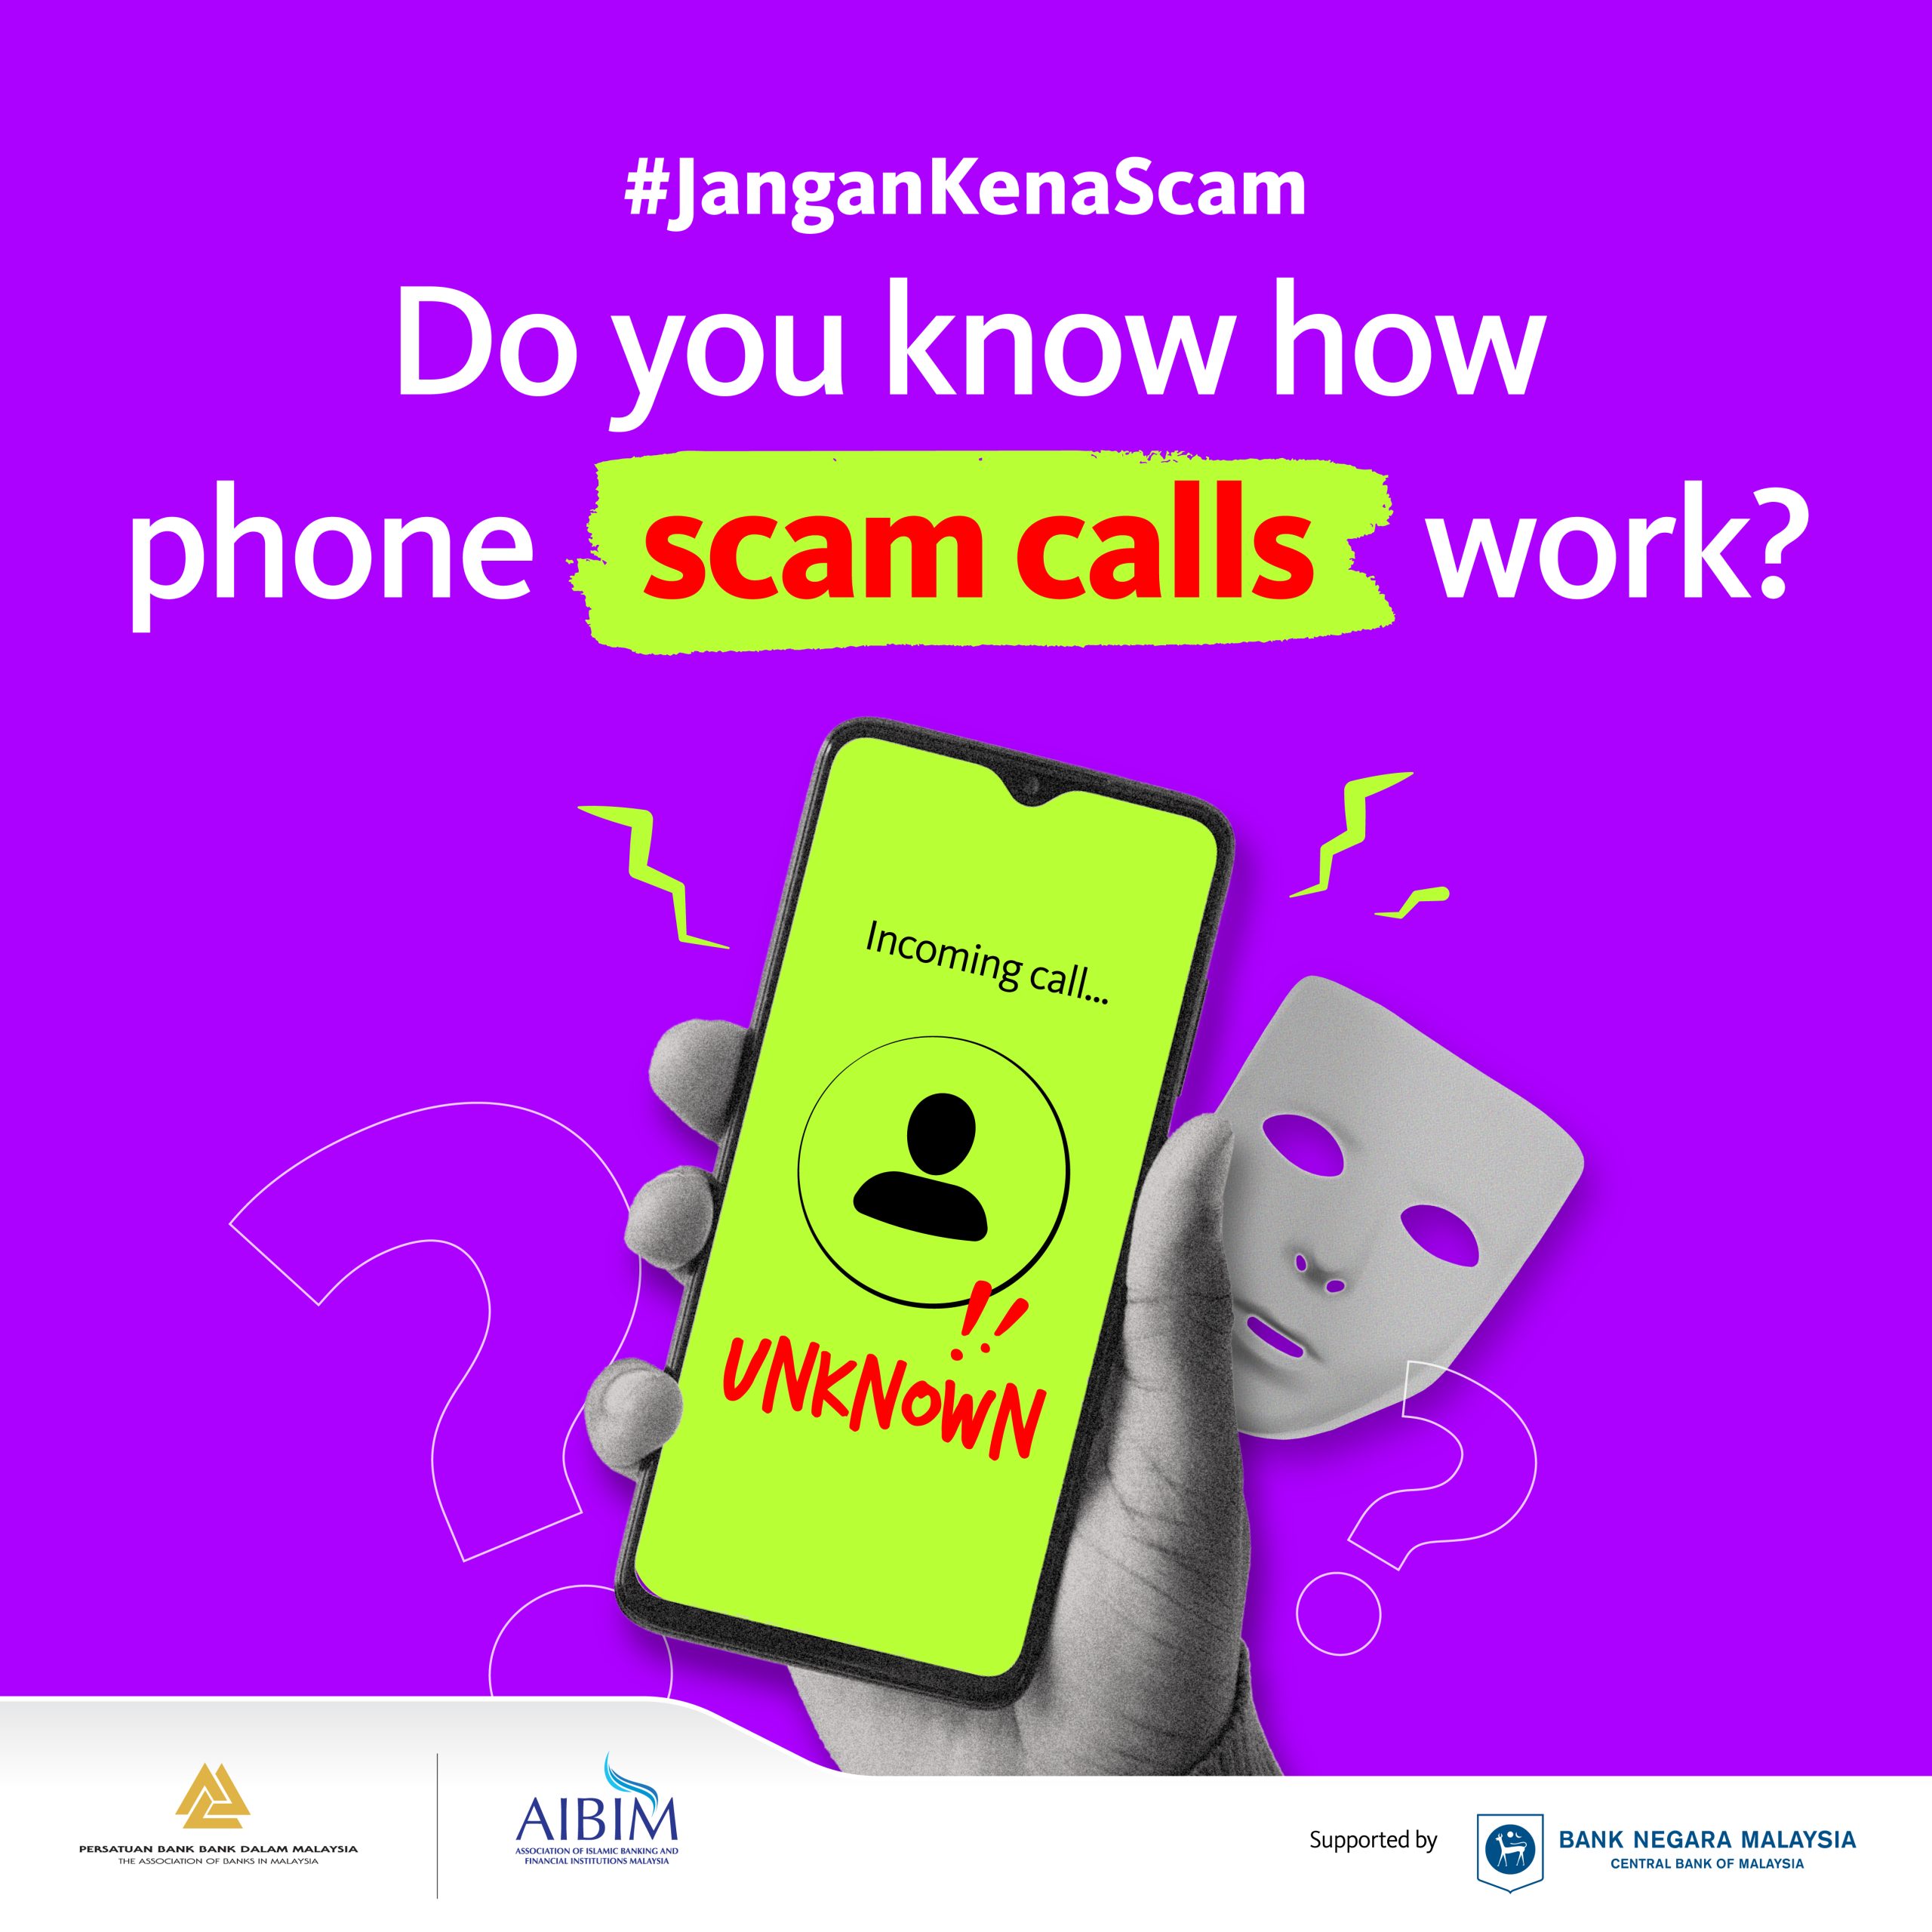 Image for #JanganKenaScam: Do you know how phone scam calls work?